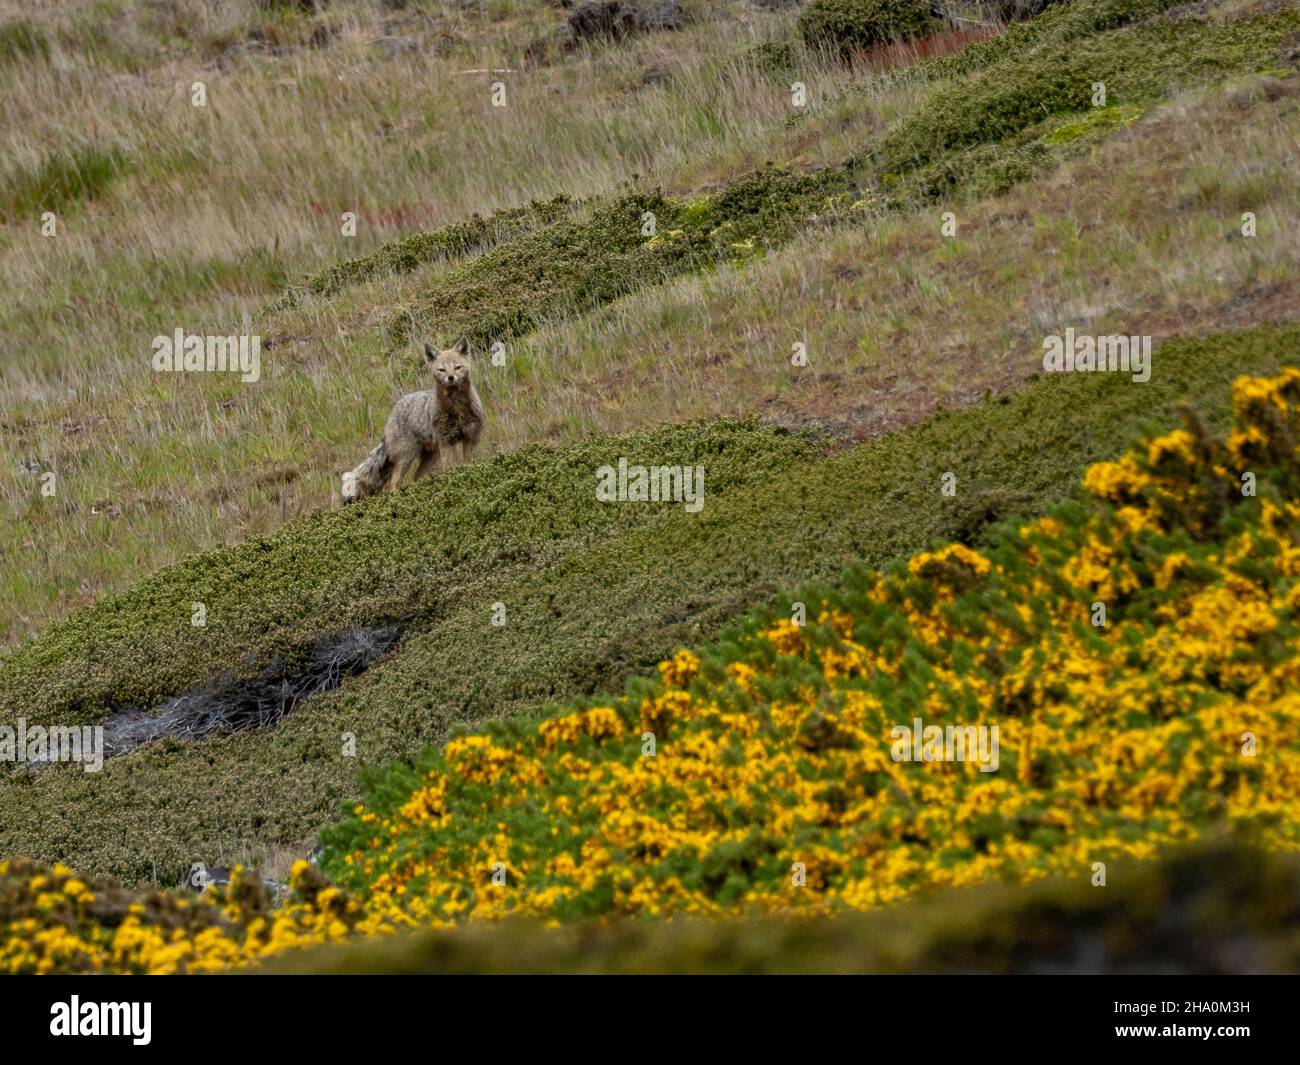 South American gray fox, Lycalopex griseus, an introduced predator on Beaver Island, Falklands Stock Photo